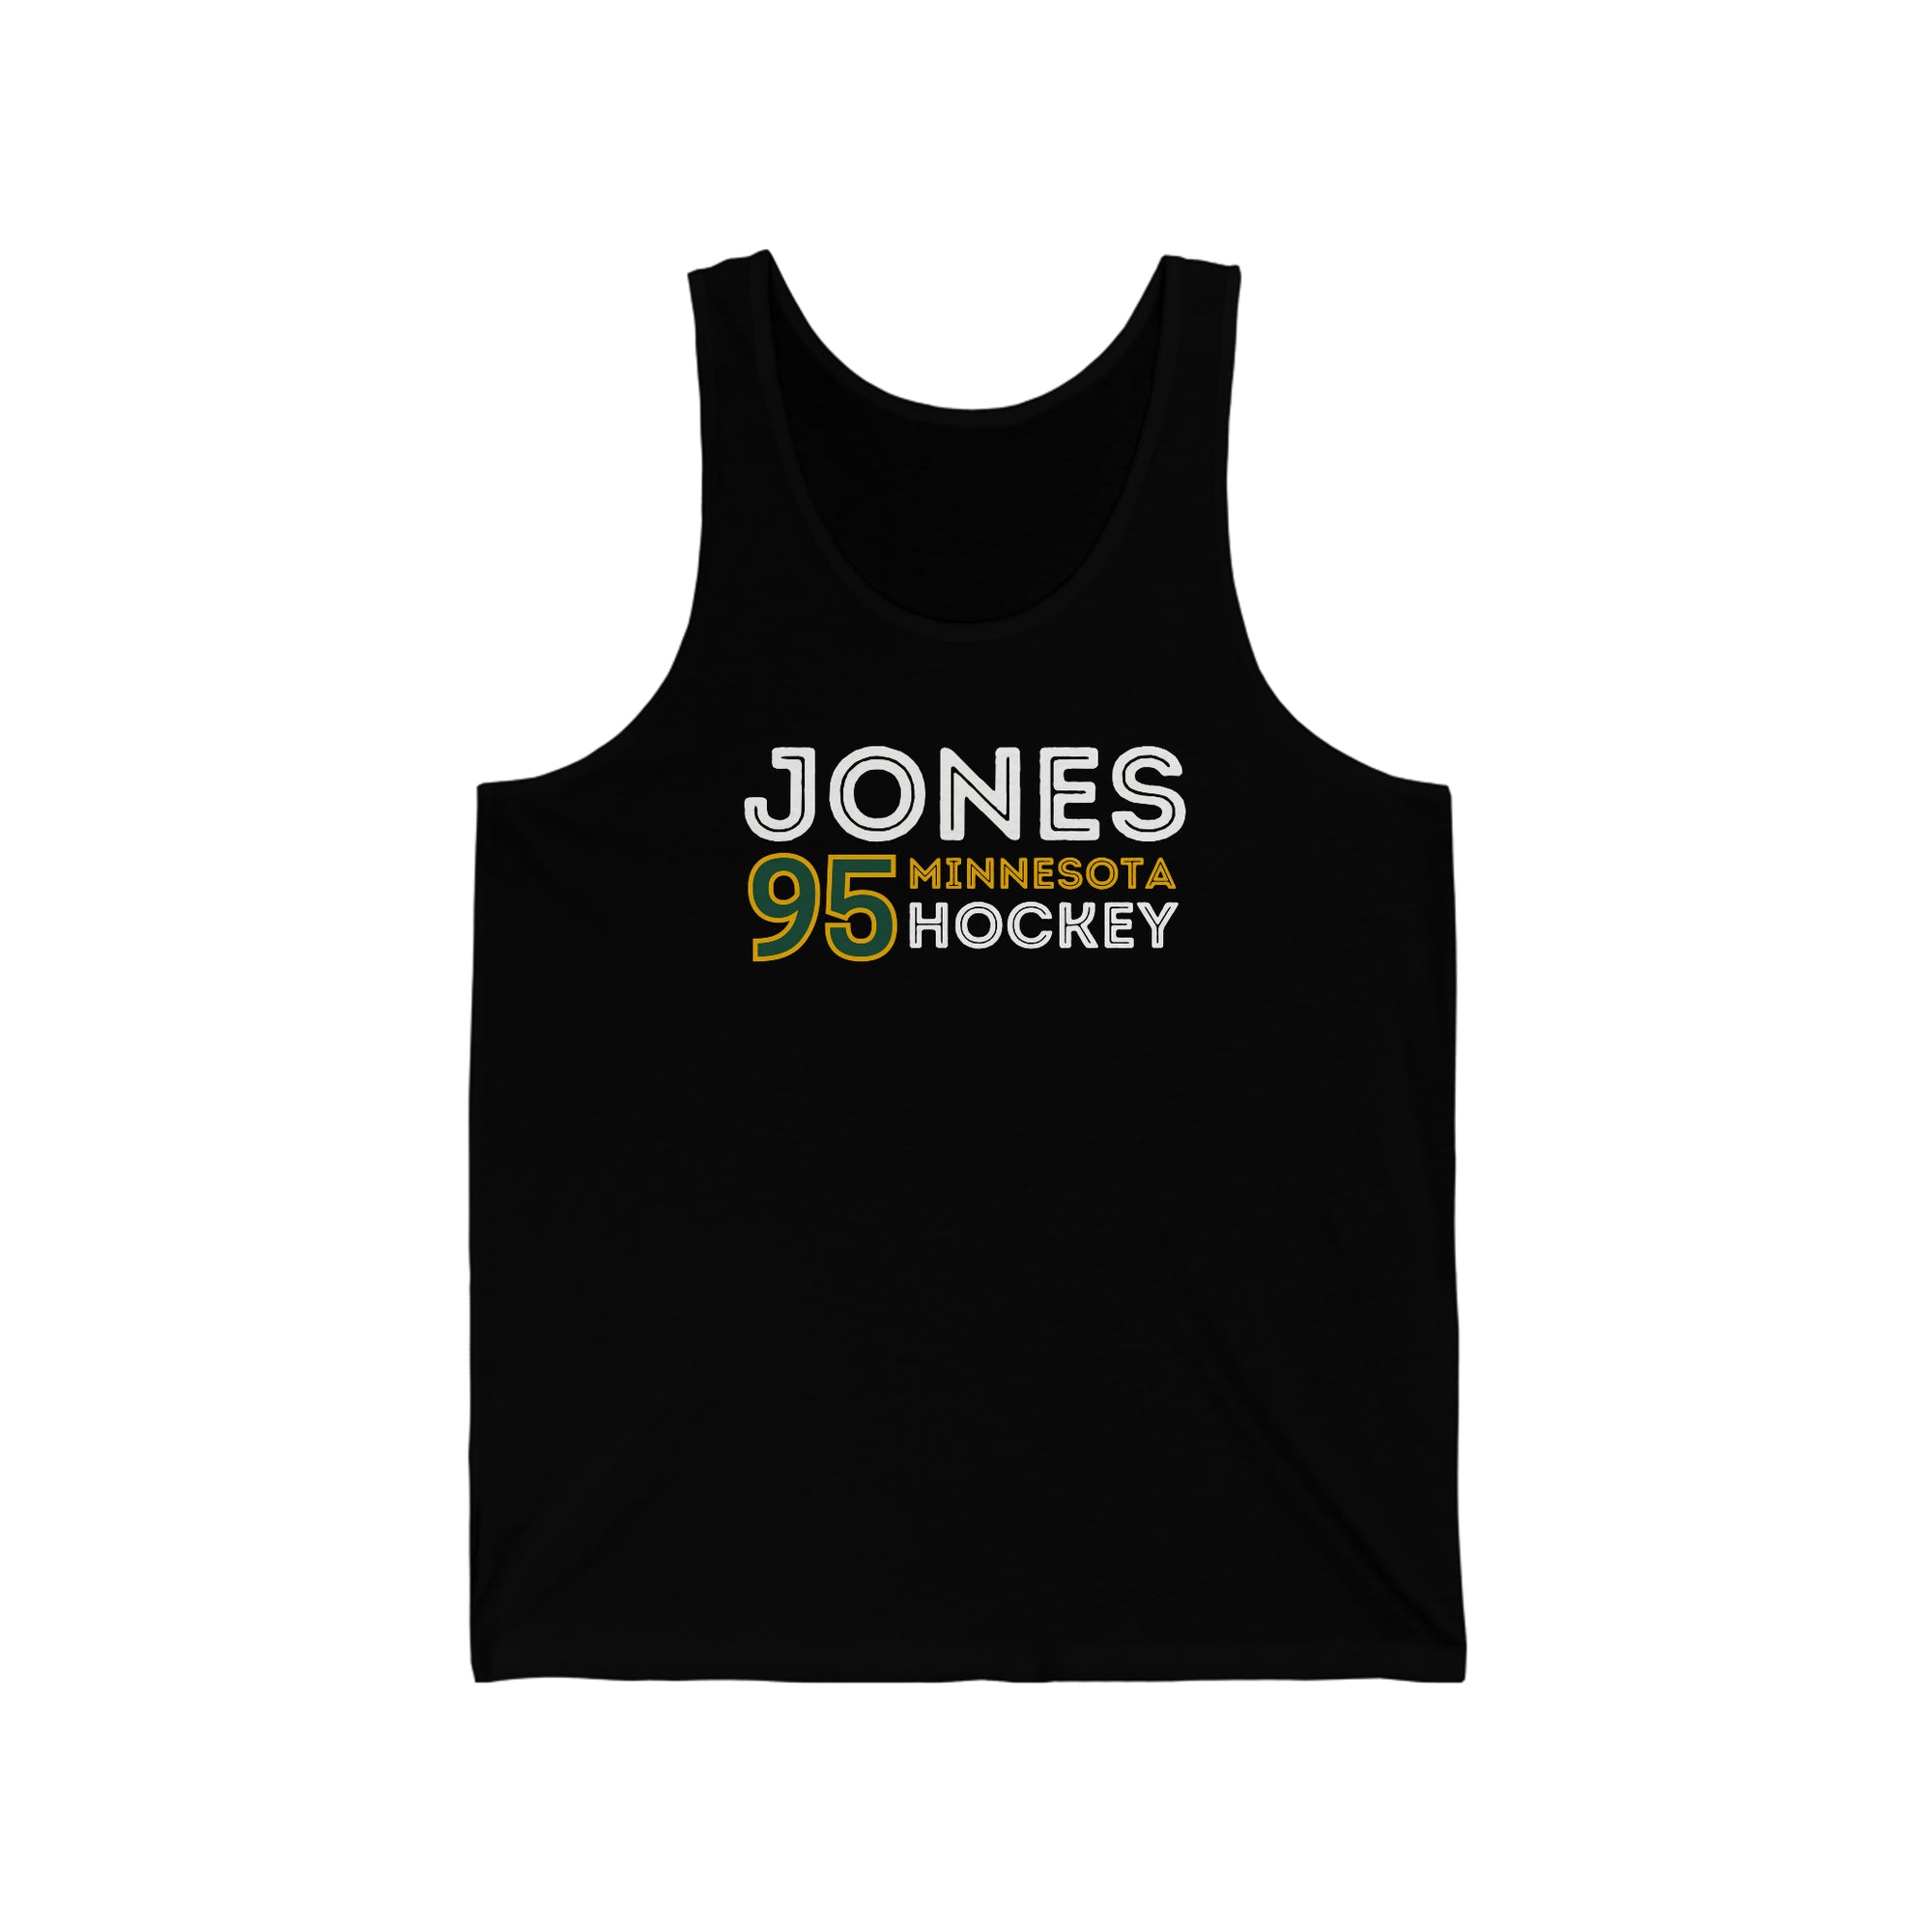 Jones 95 Minnesota Hockey Grafitti Wall Design Unisex Jersey Tank Top